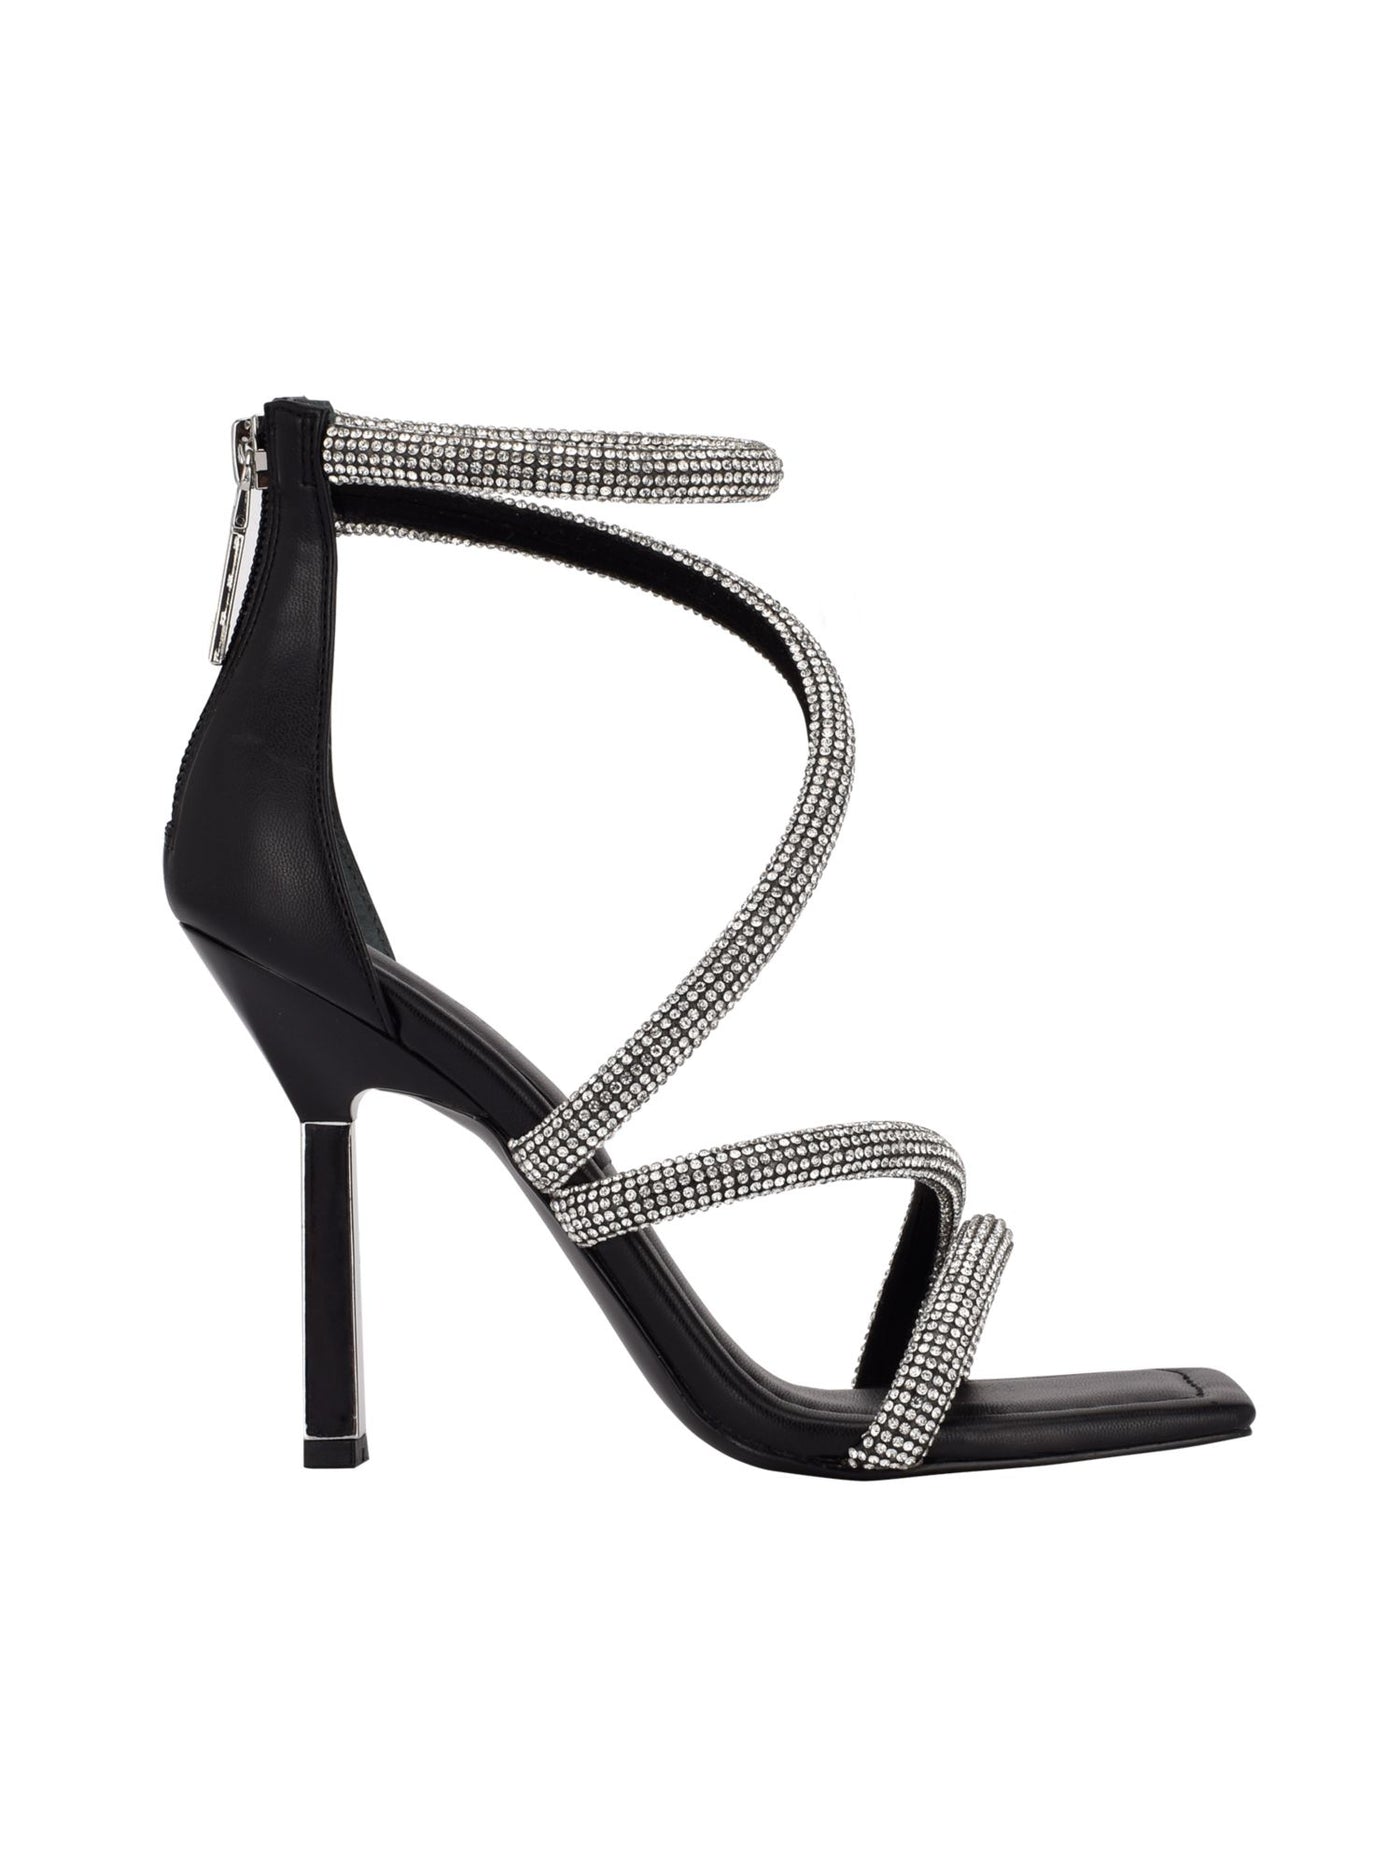 GUESS Womens Black Padded Ankle Strap Embellished Lalali Square Toe Zip-Up Dress Heeled Sandal 6 M